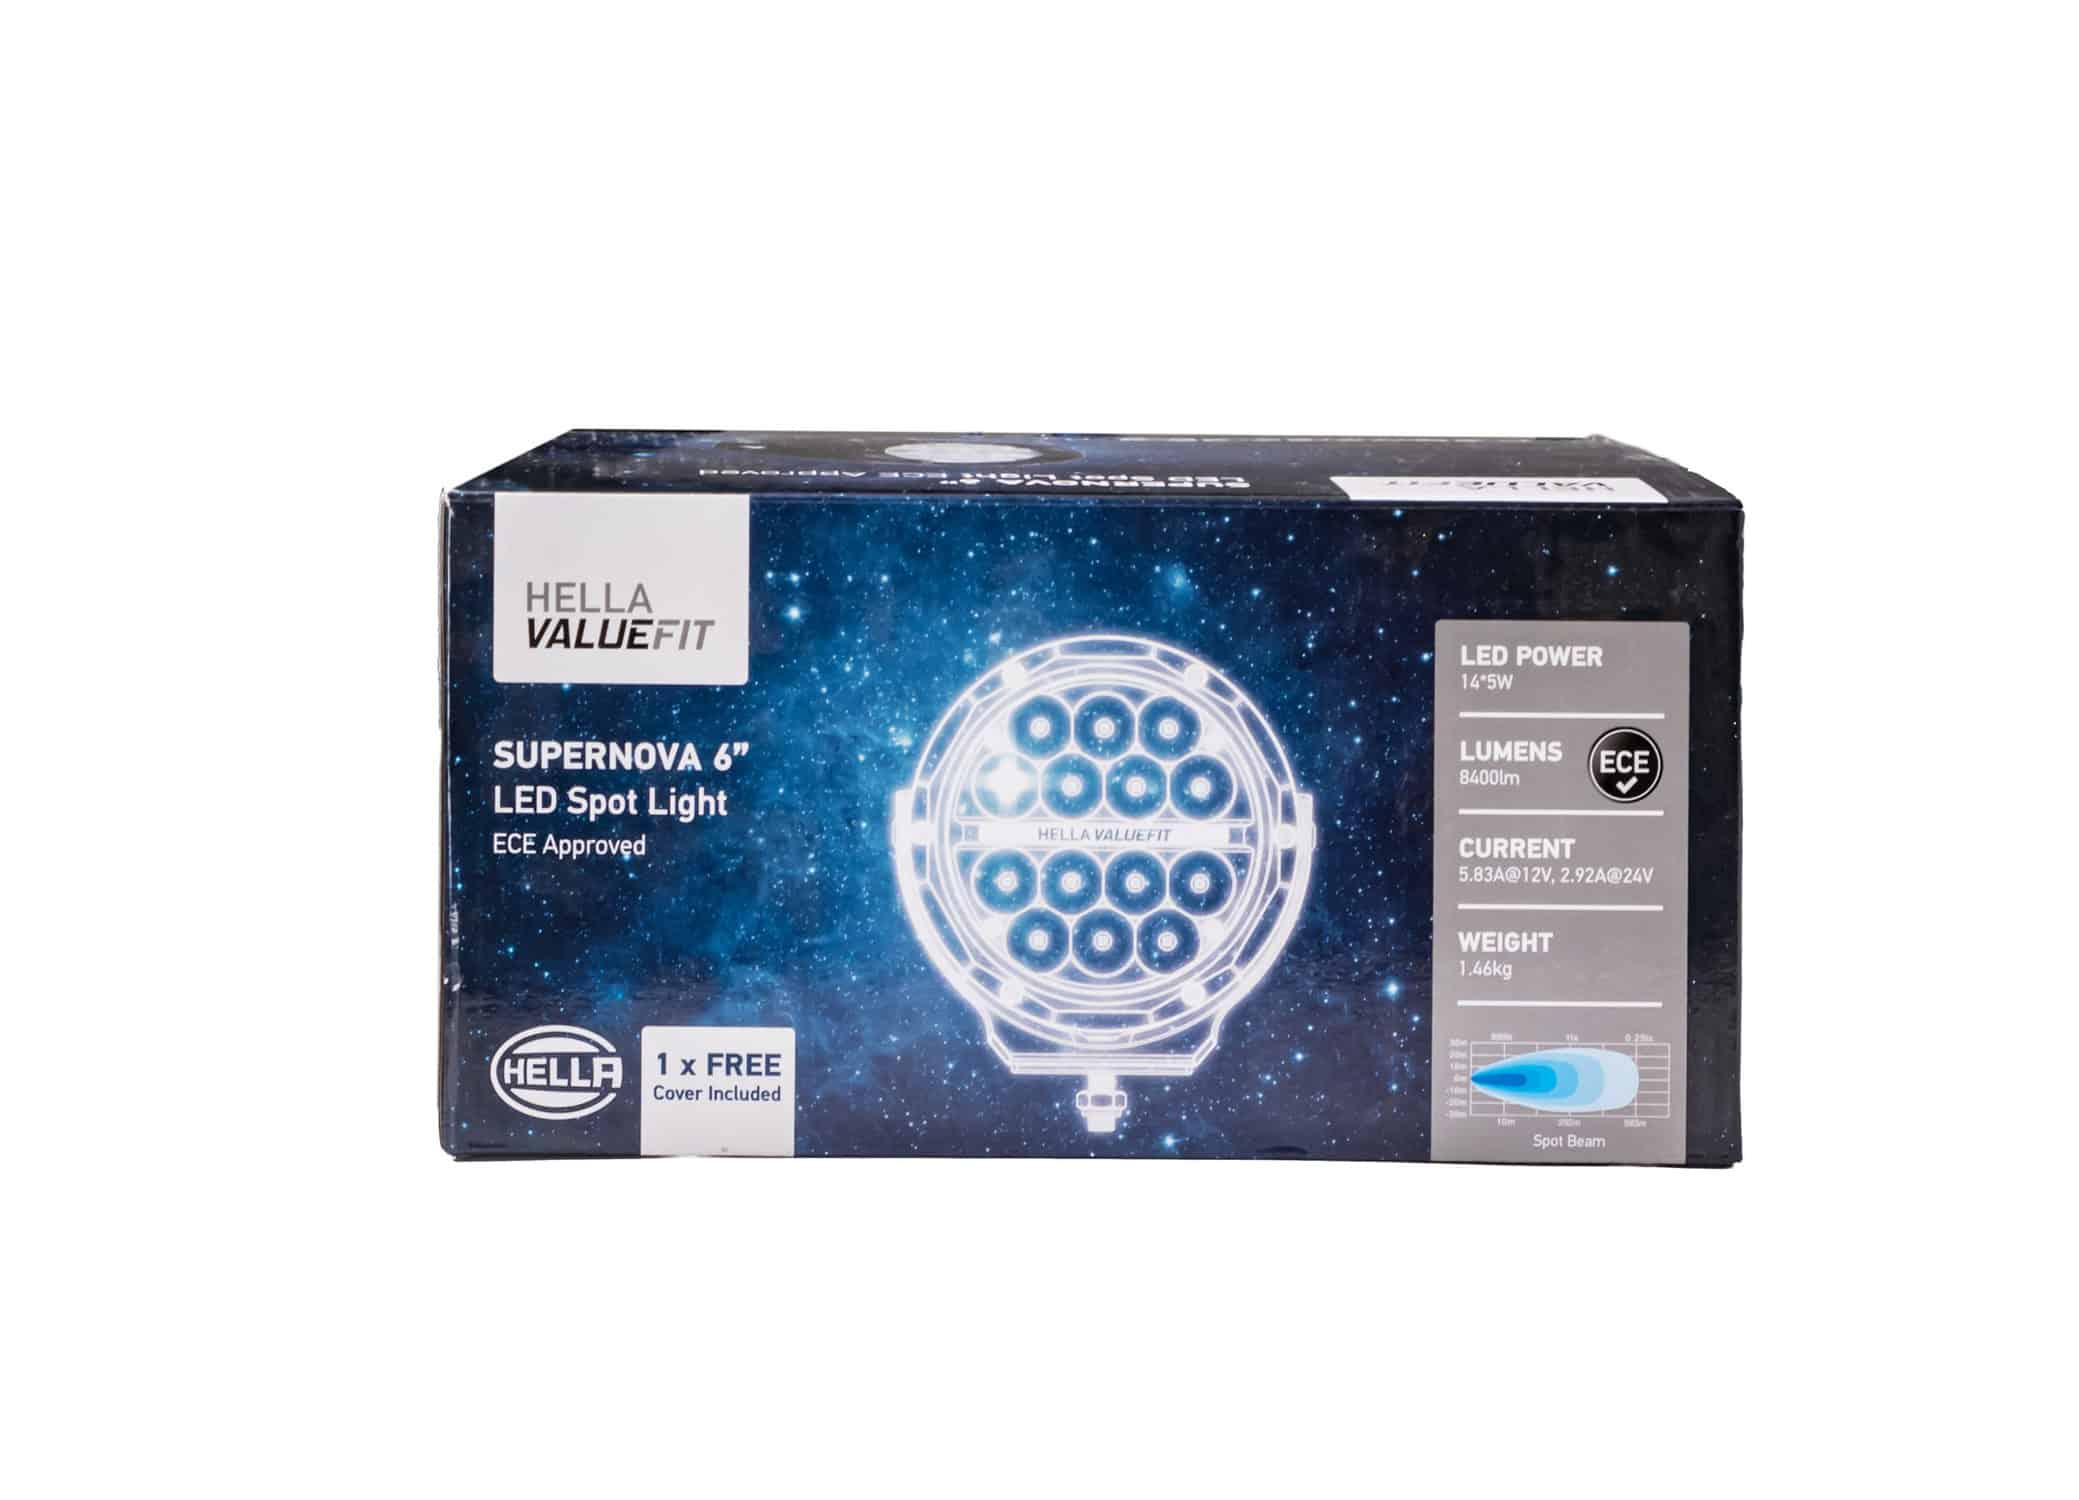 Hella Value Fit Supernova LED Spot Light 6 Inch Set Kit — HSB Trading